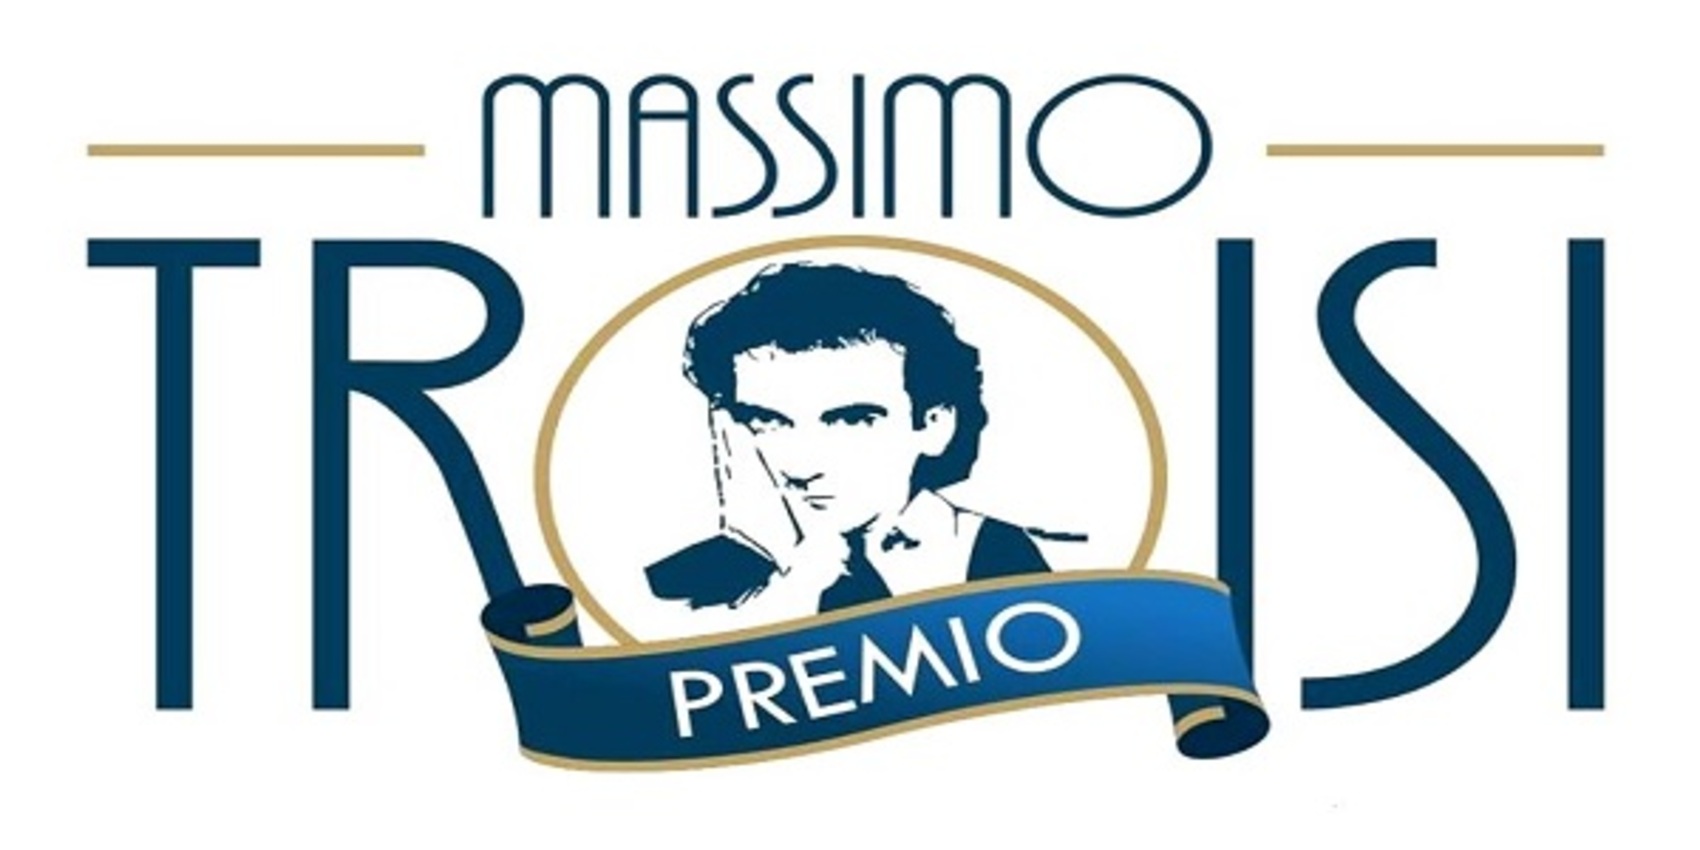 PREMIO "MASSIMO TROISI" 2022